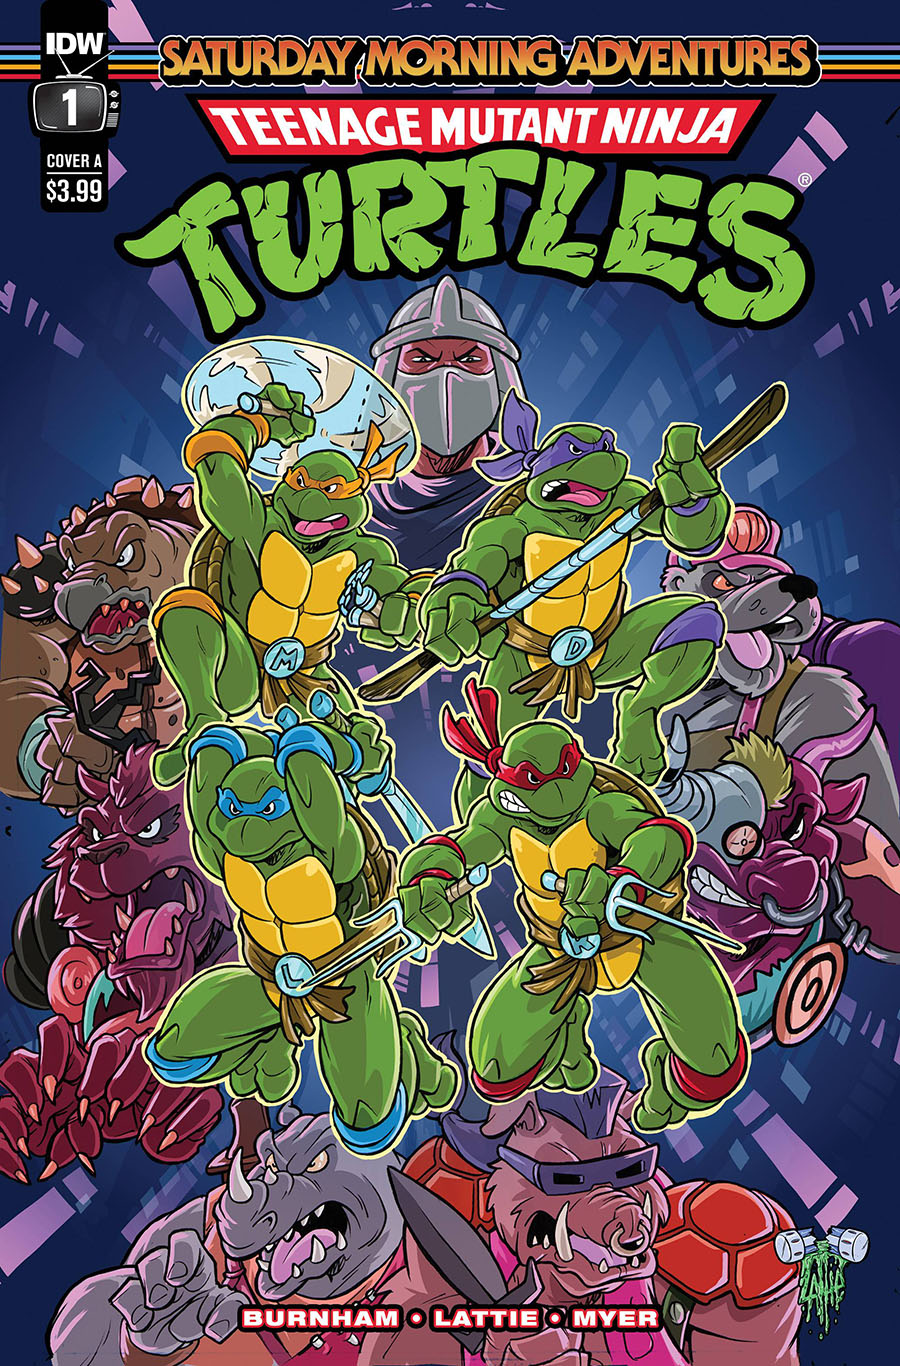 Teenage Mutant Ninja Turtles Saturday Morning Adventures #1 Cover A Regular Tim Lattie Cover